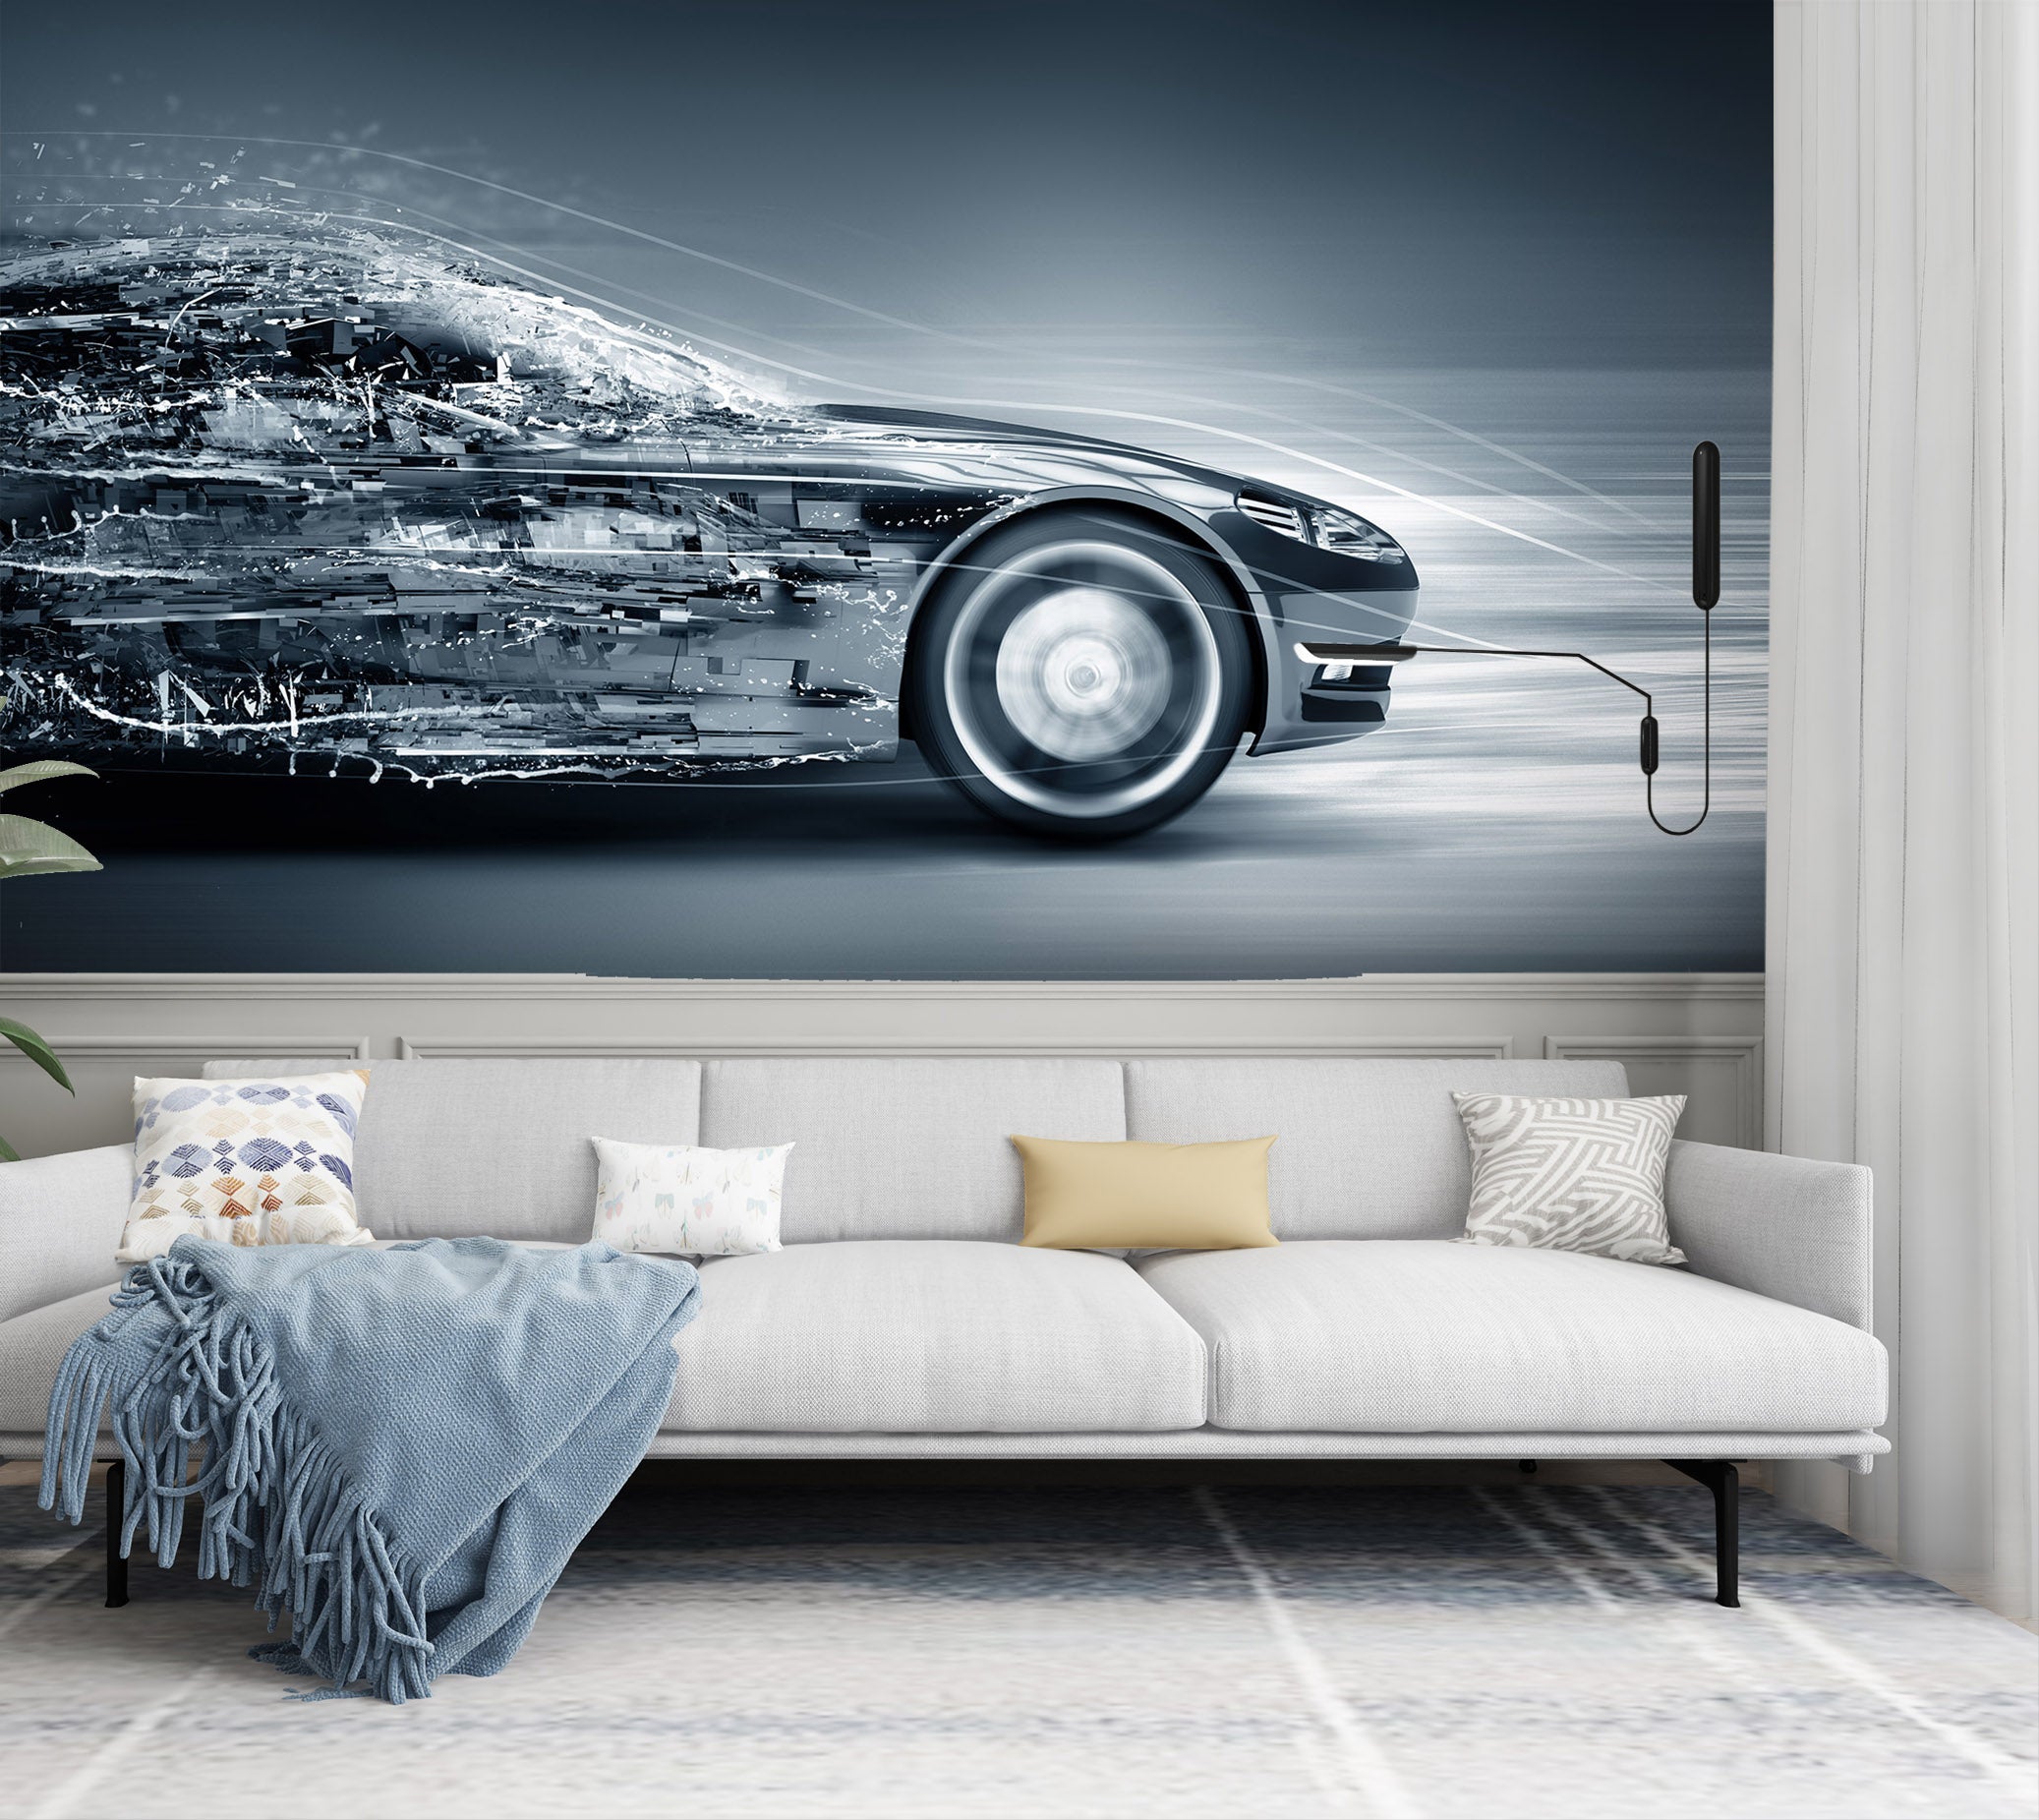 3D Creative Advertising 321 Vehicle Wall Murals